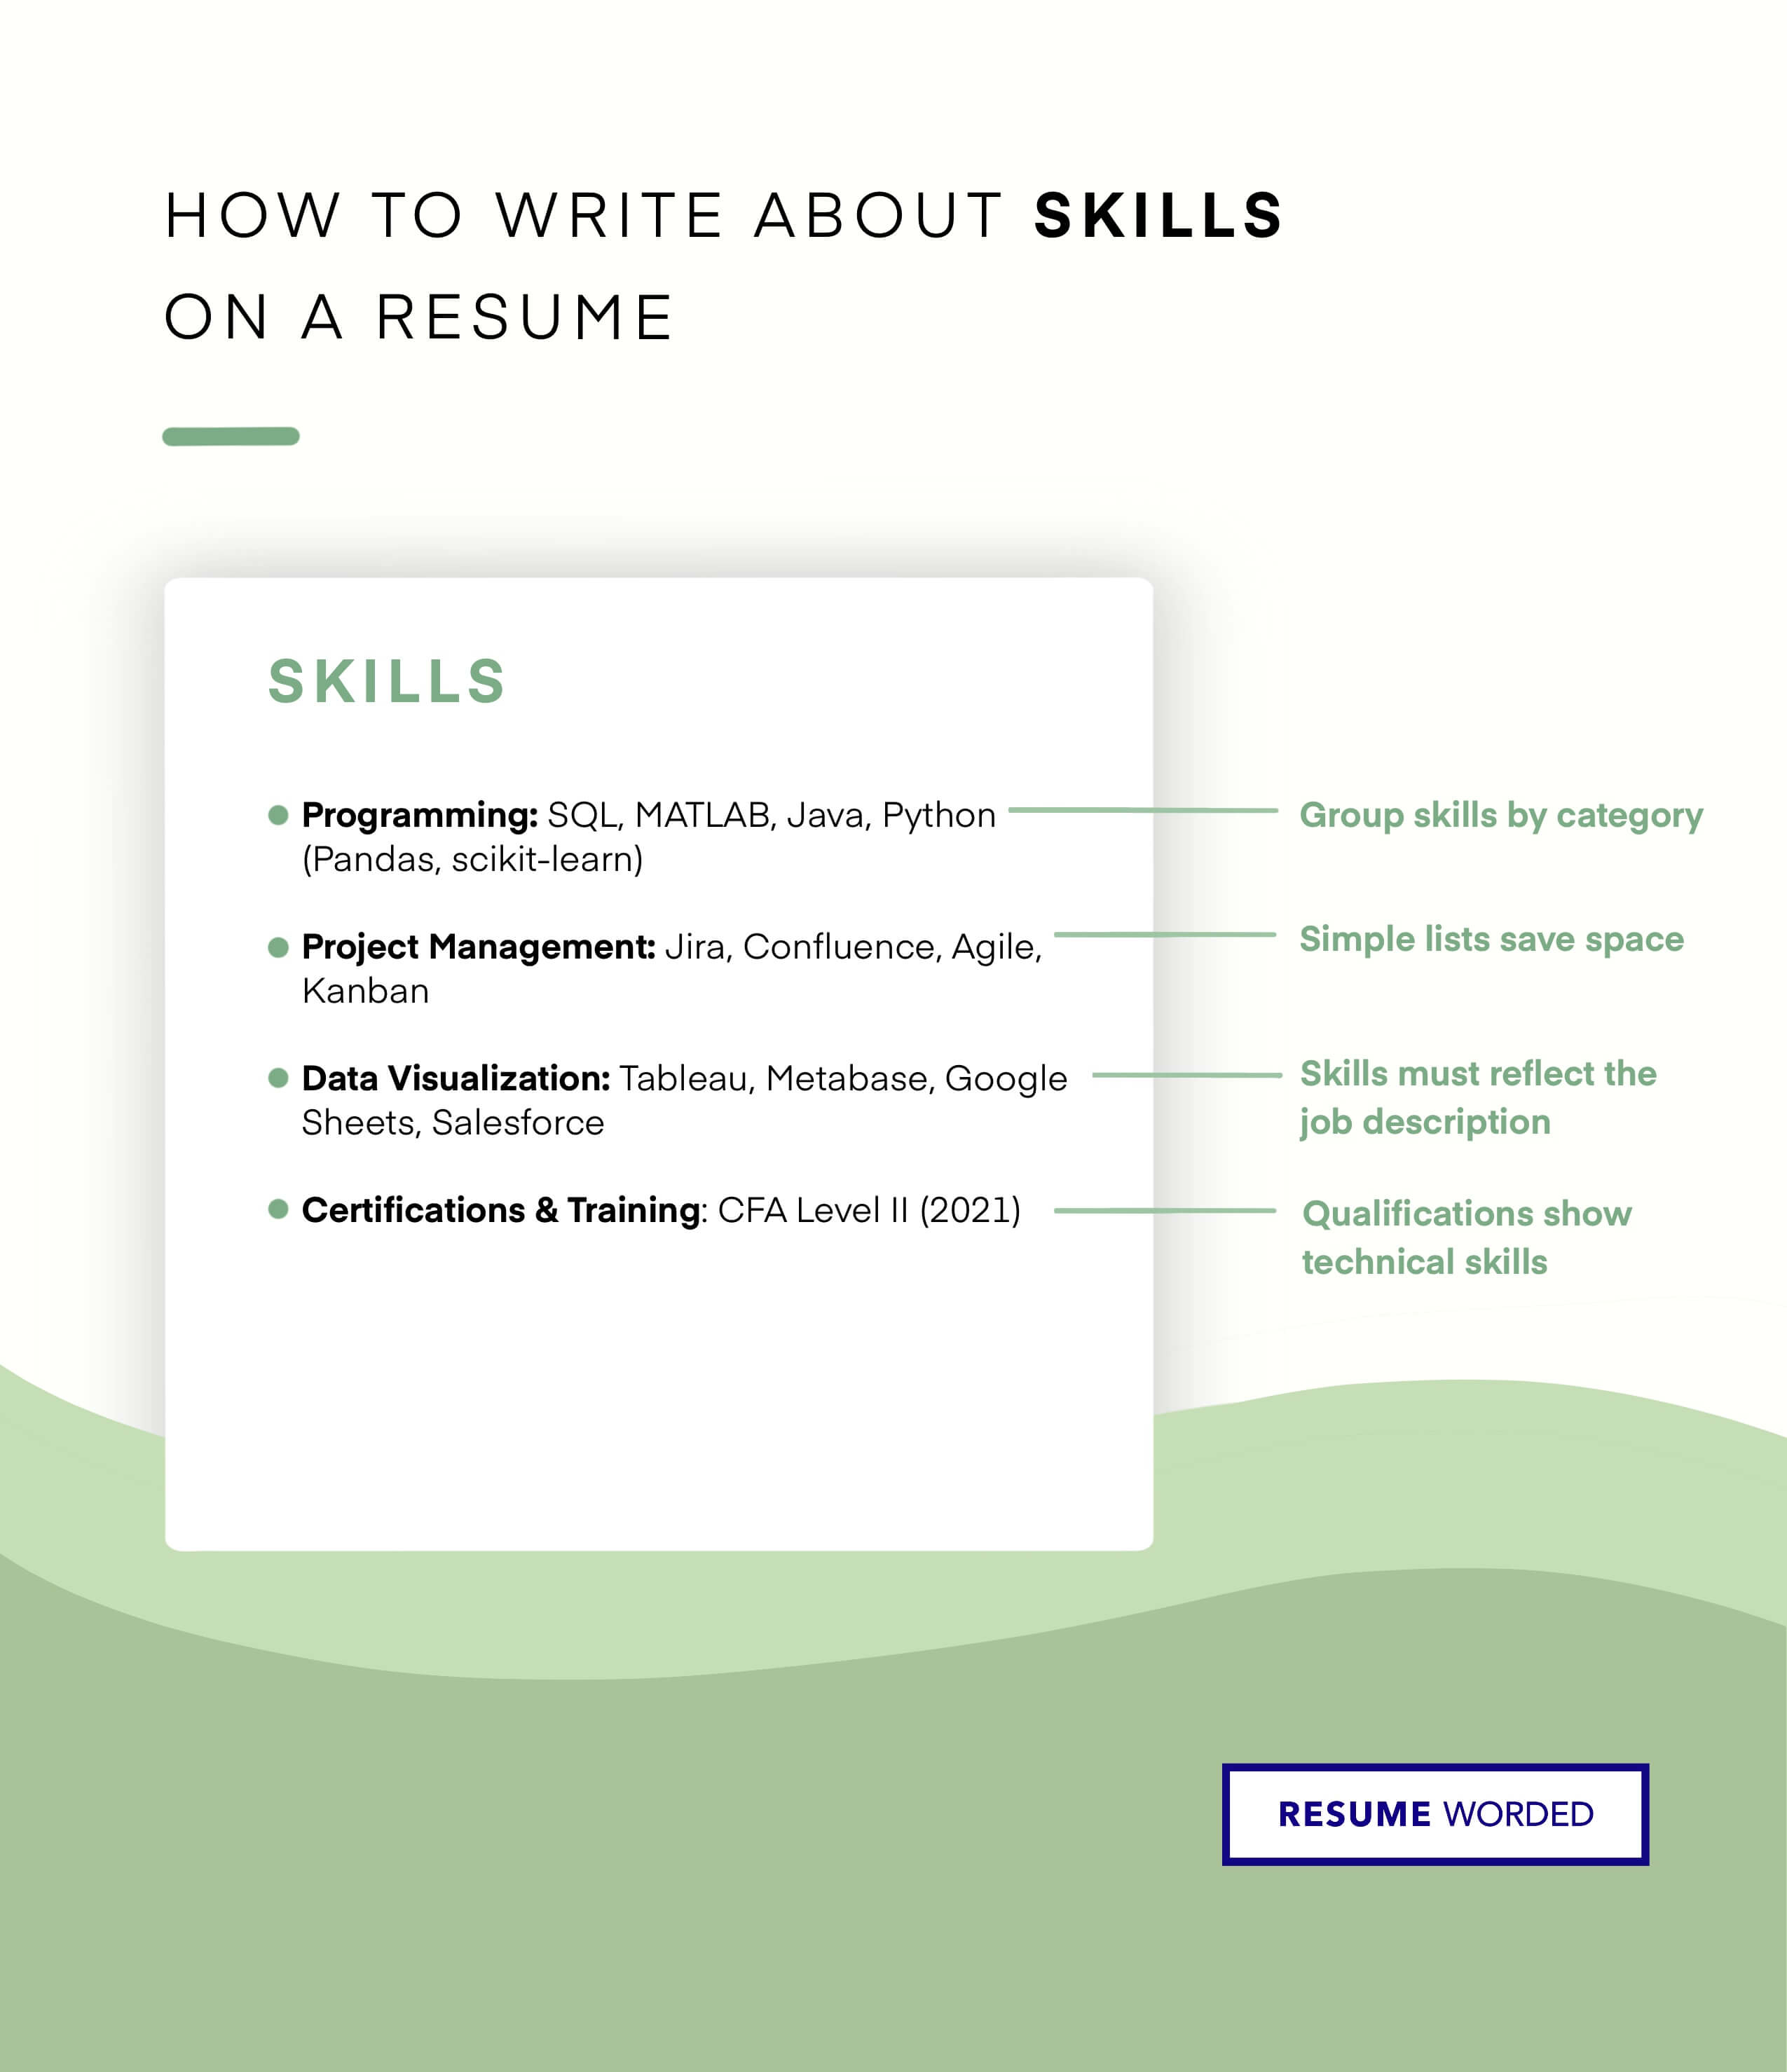 Emphasize your digital skills - Communications Manager Resume